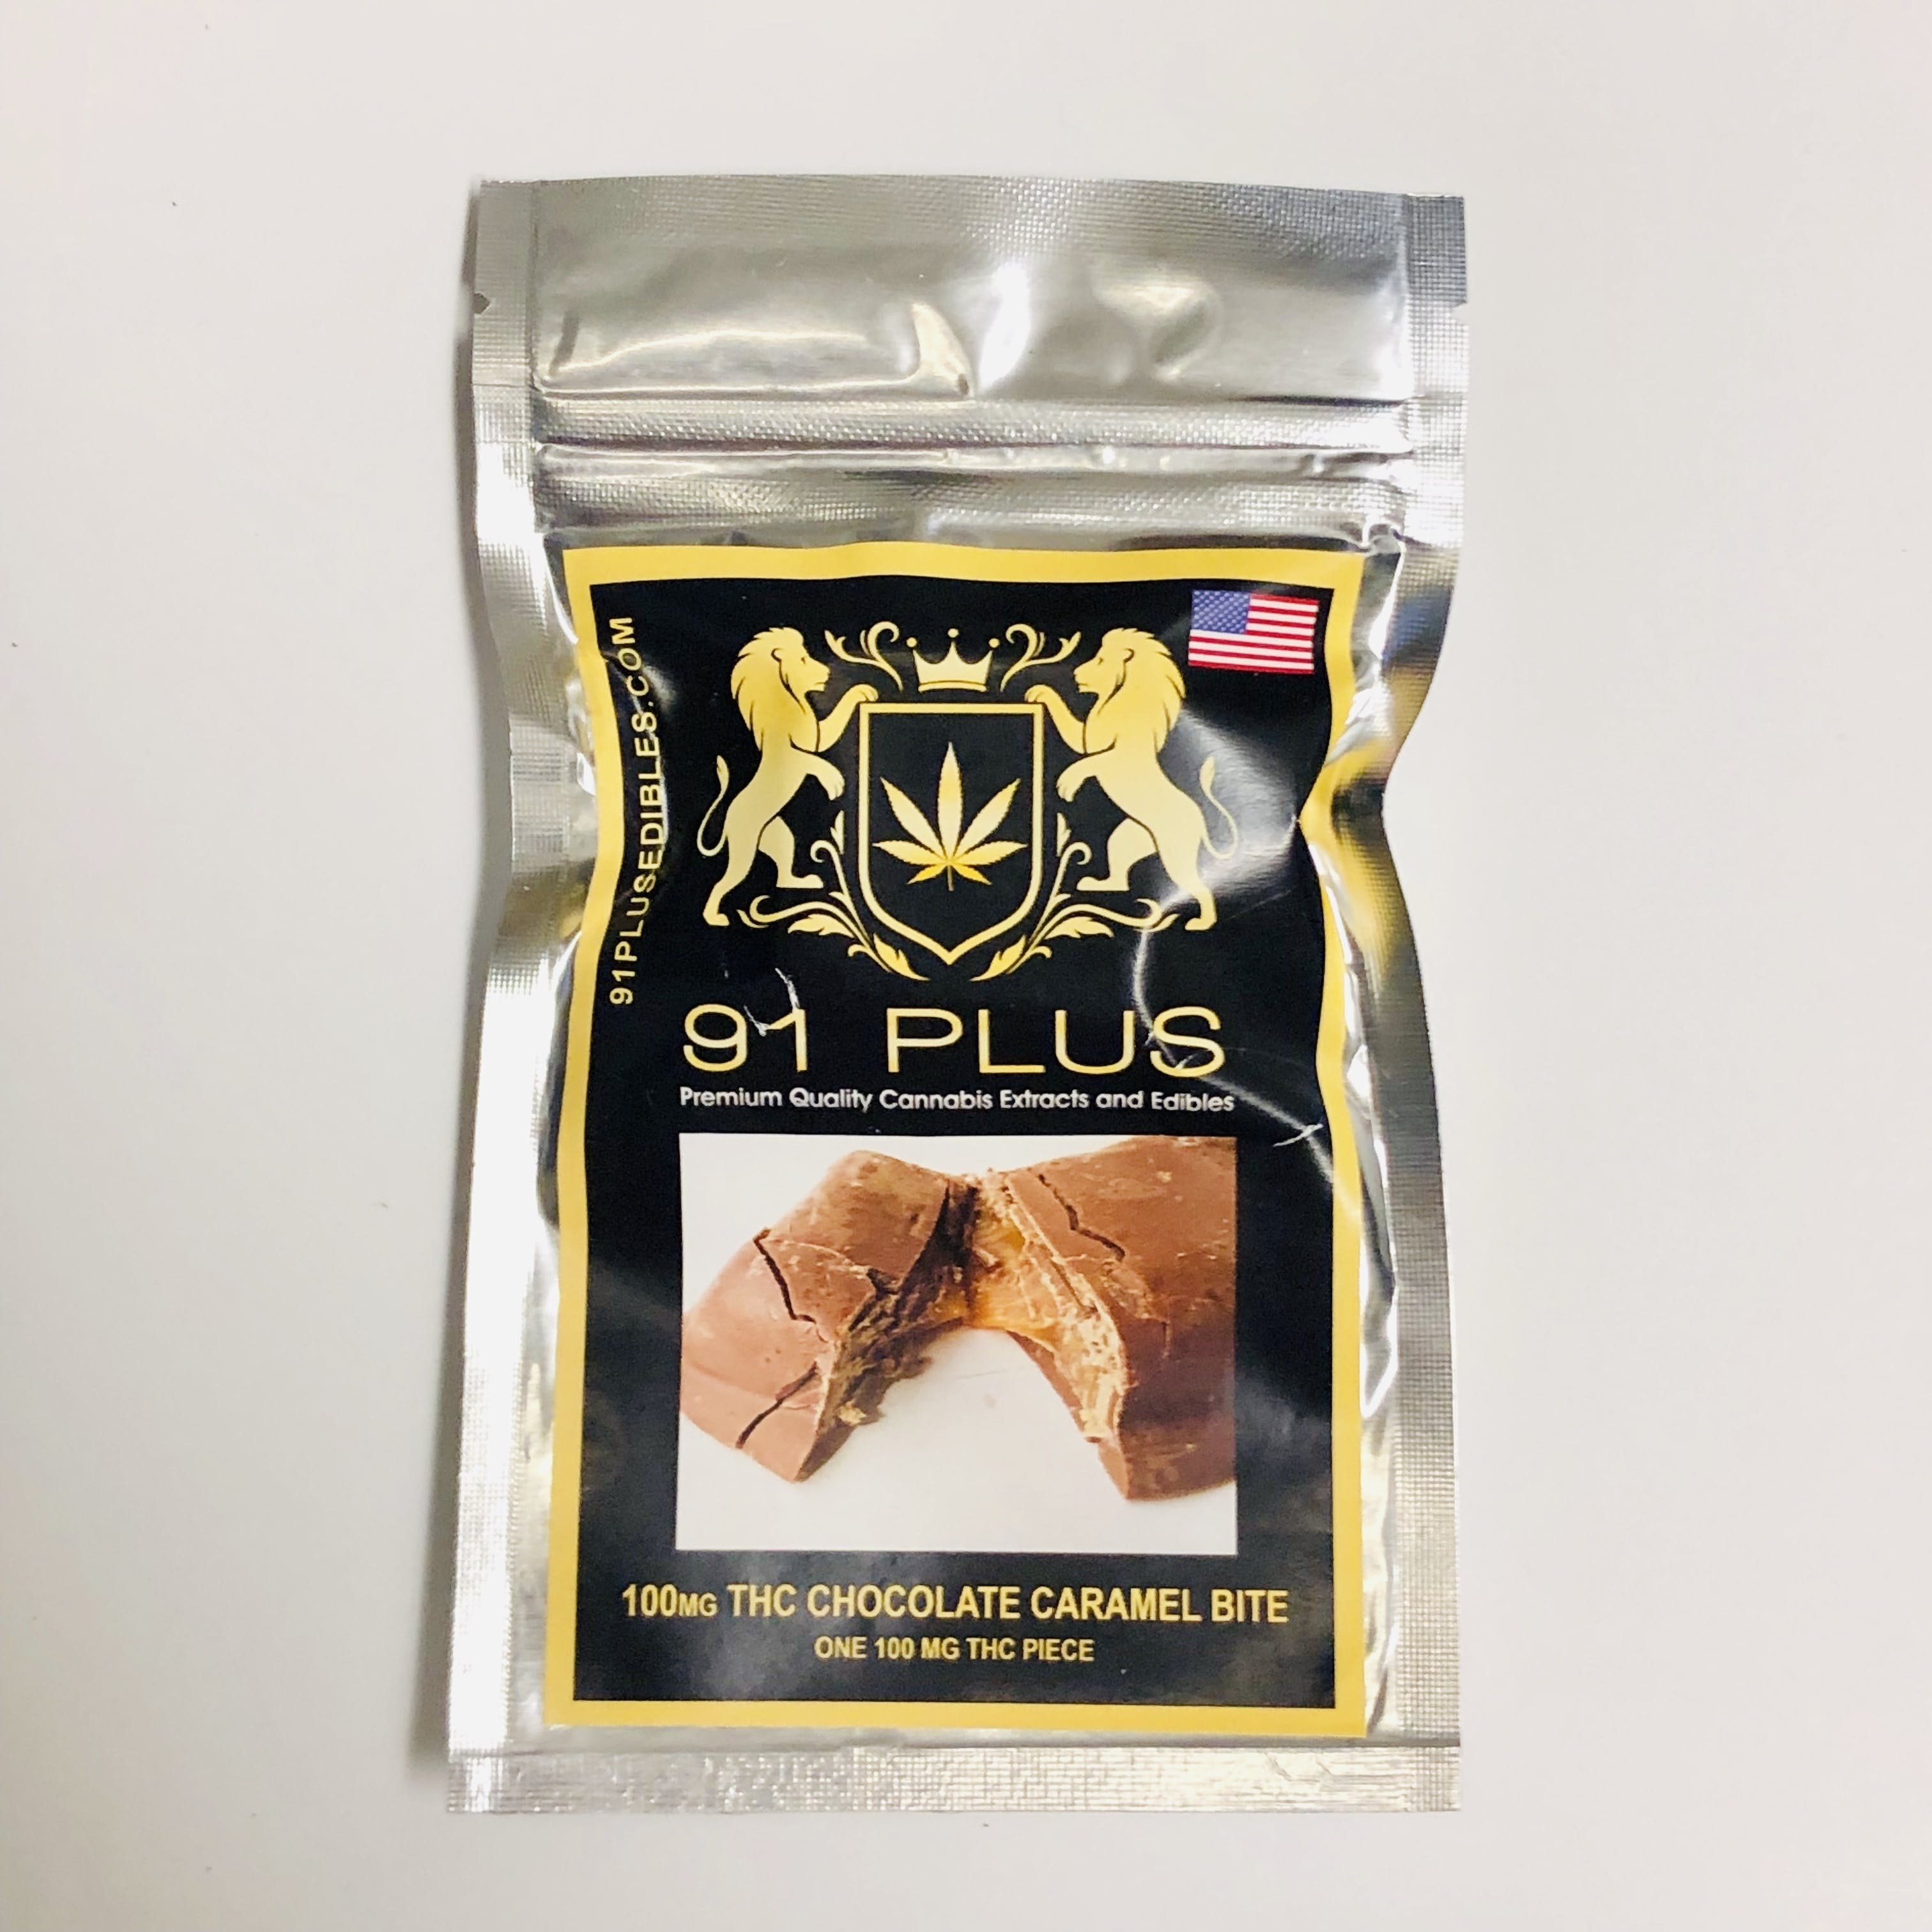 91 PLUS - Chocolate Caramel Bites 100mg